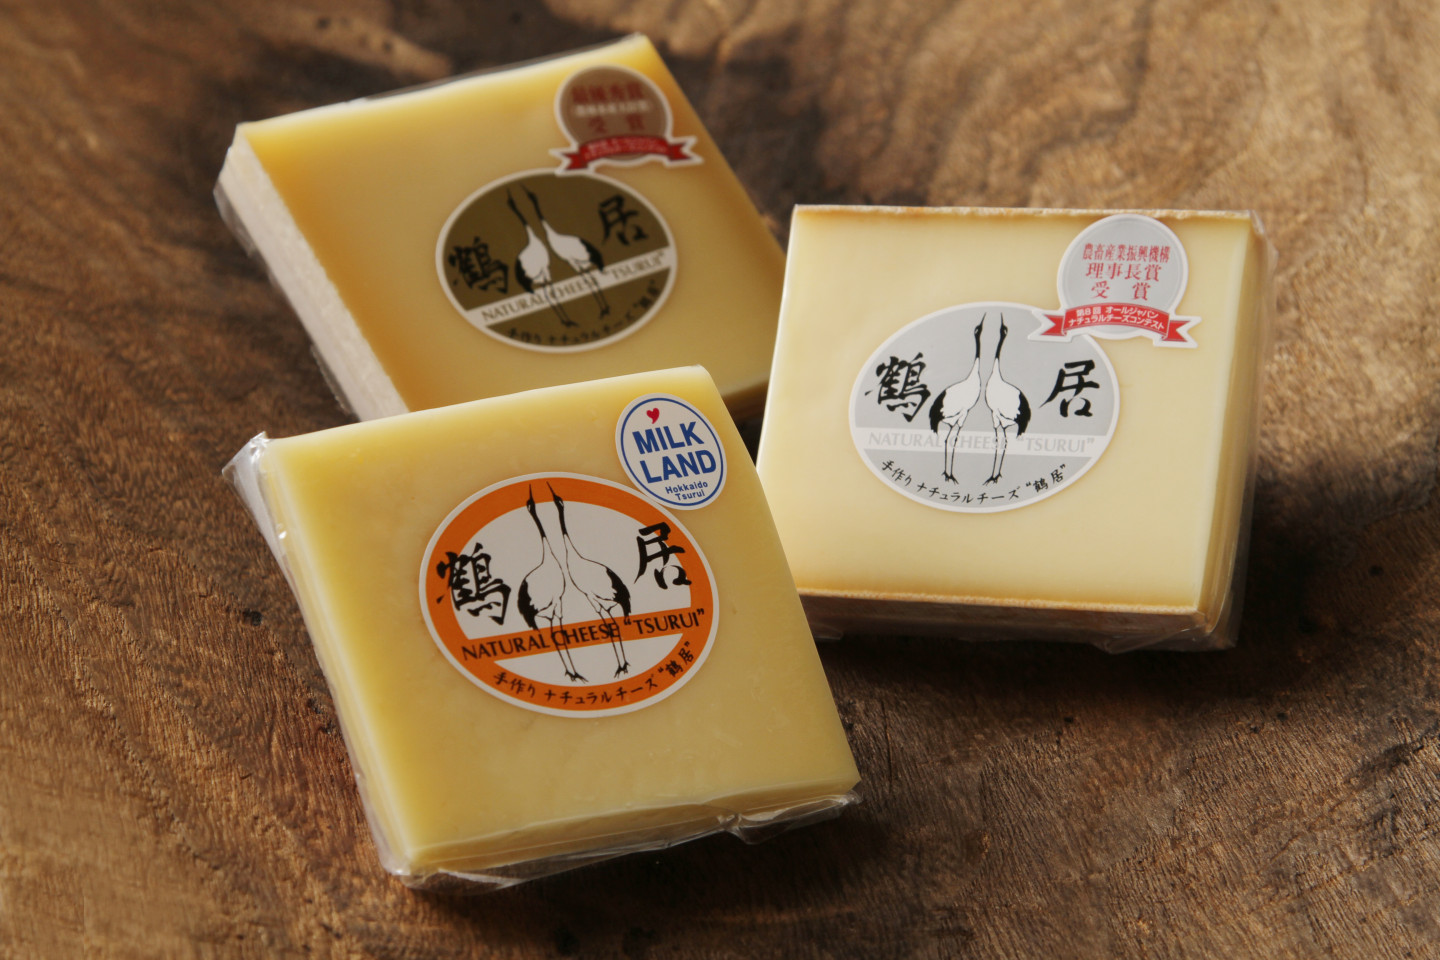 [Tsurui Village] Gold medal winning natural cheese